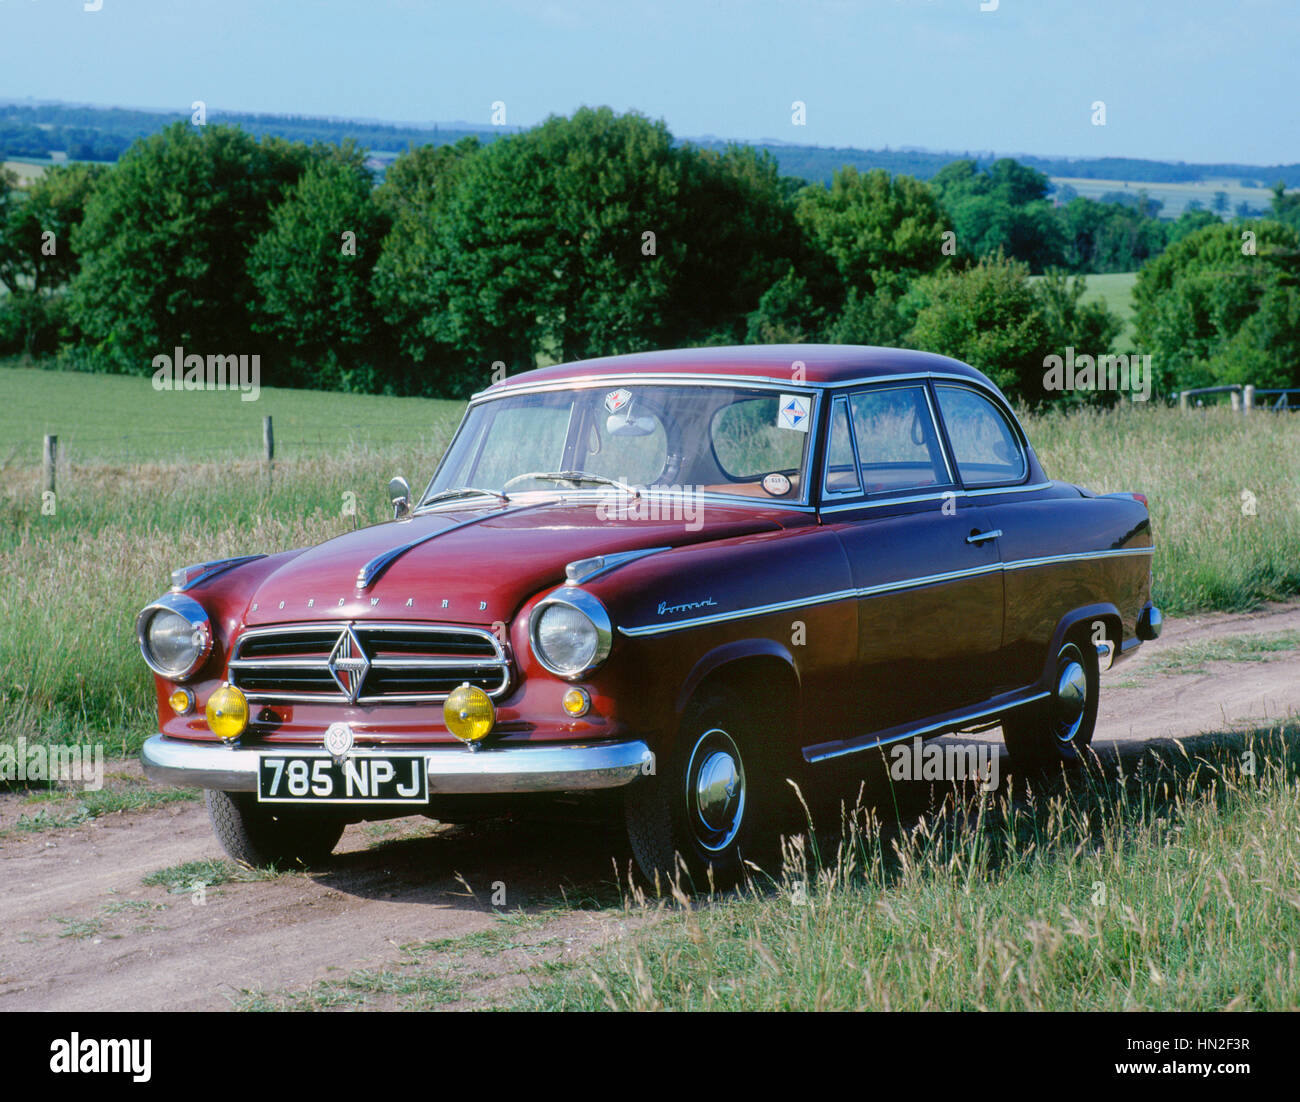 Borgward car hi-res stock photography and images - Alamy